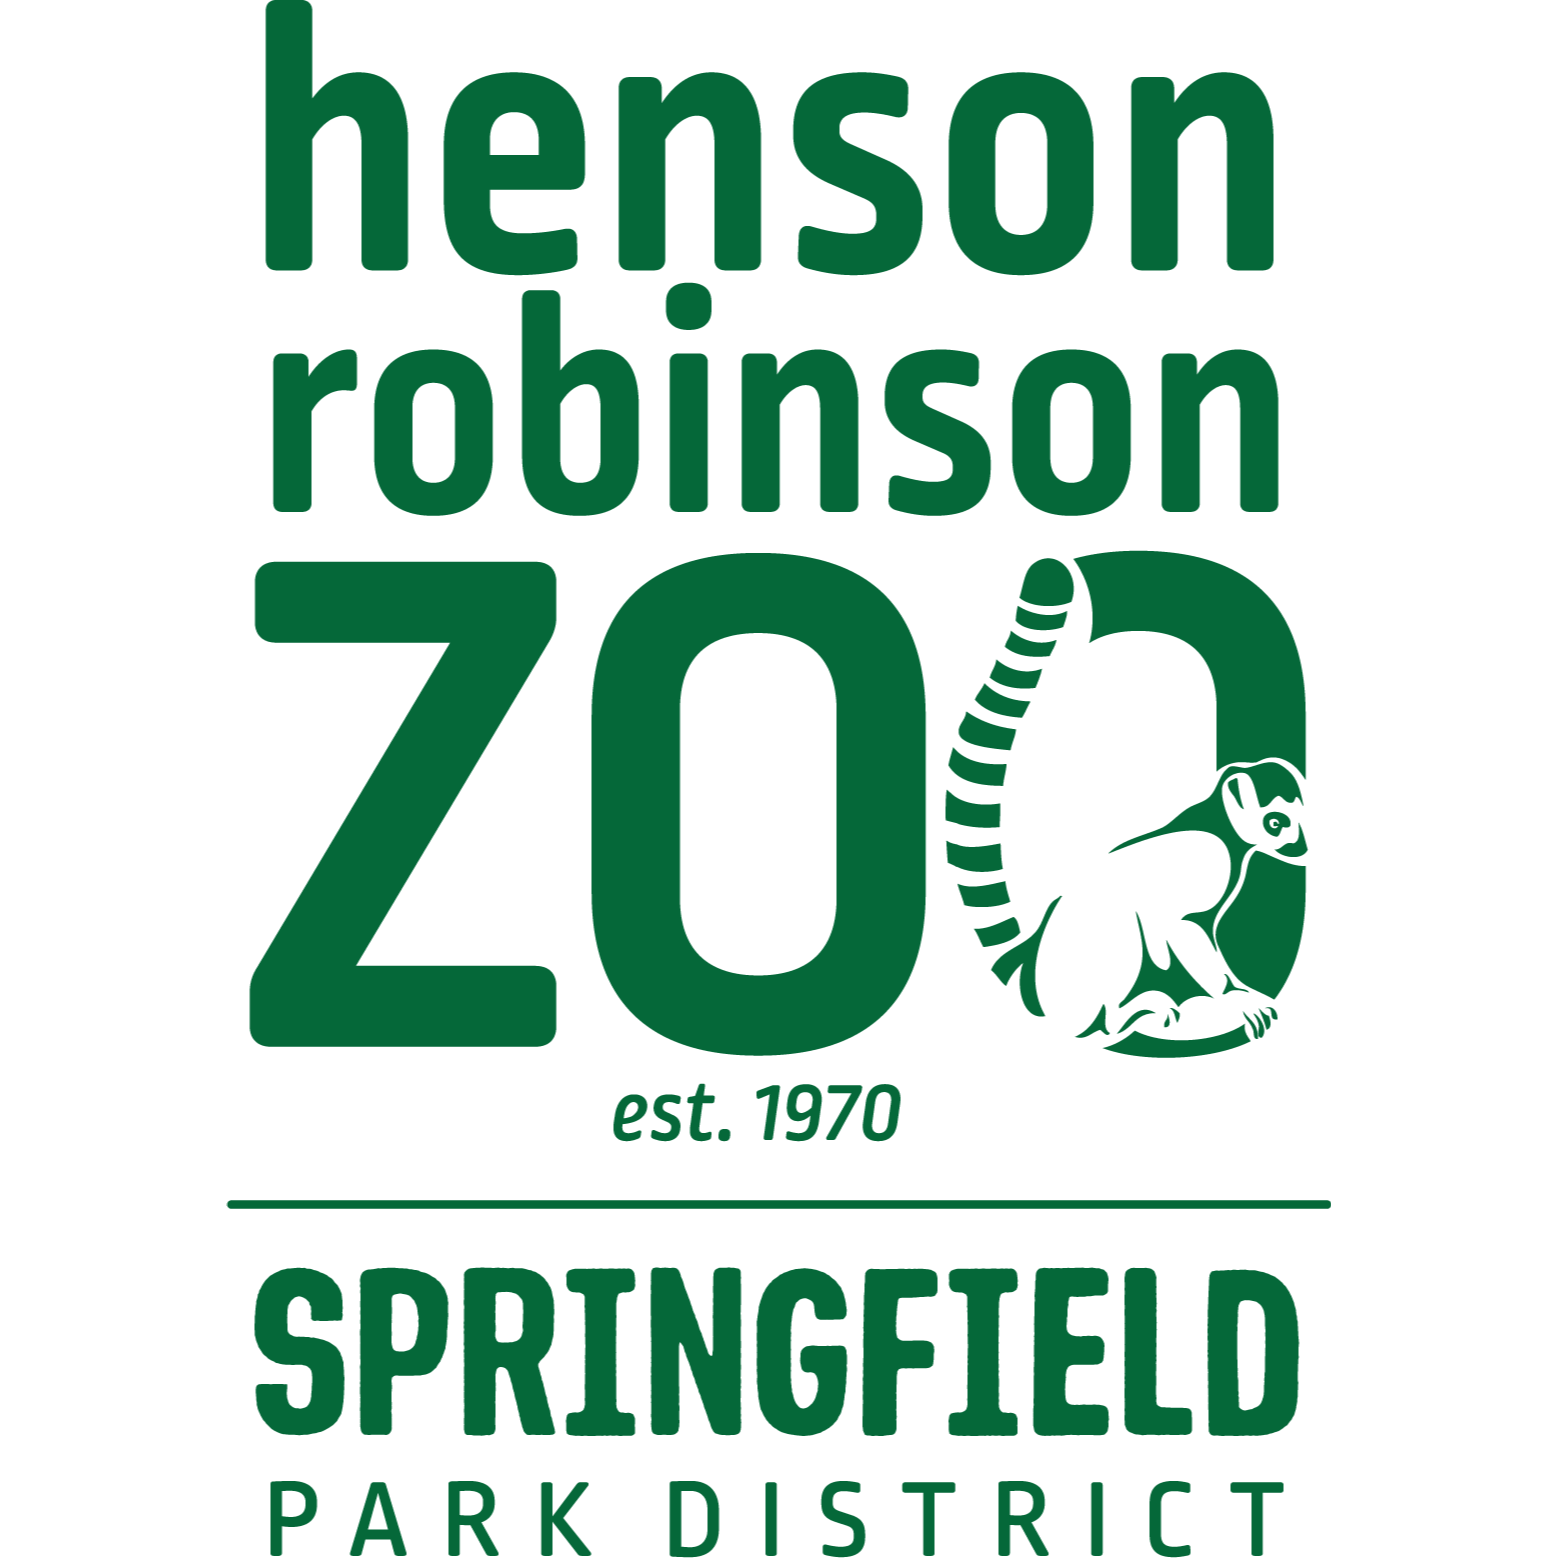 Henson Robinson Zoo Springfield (217)585-1821